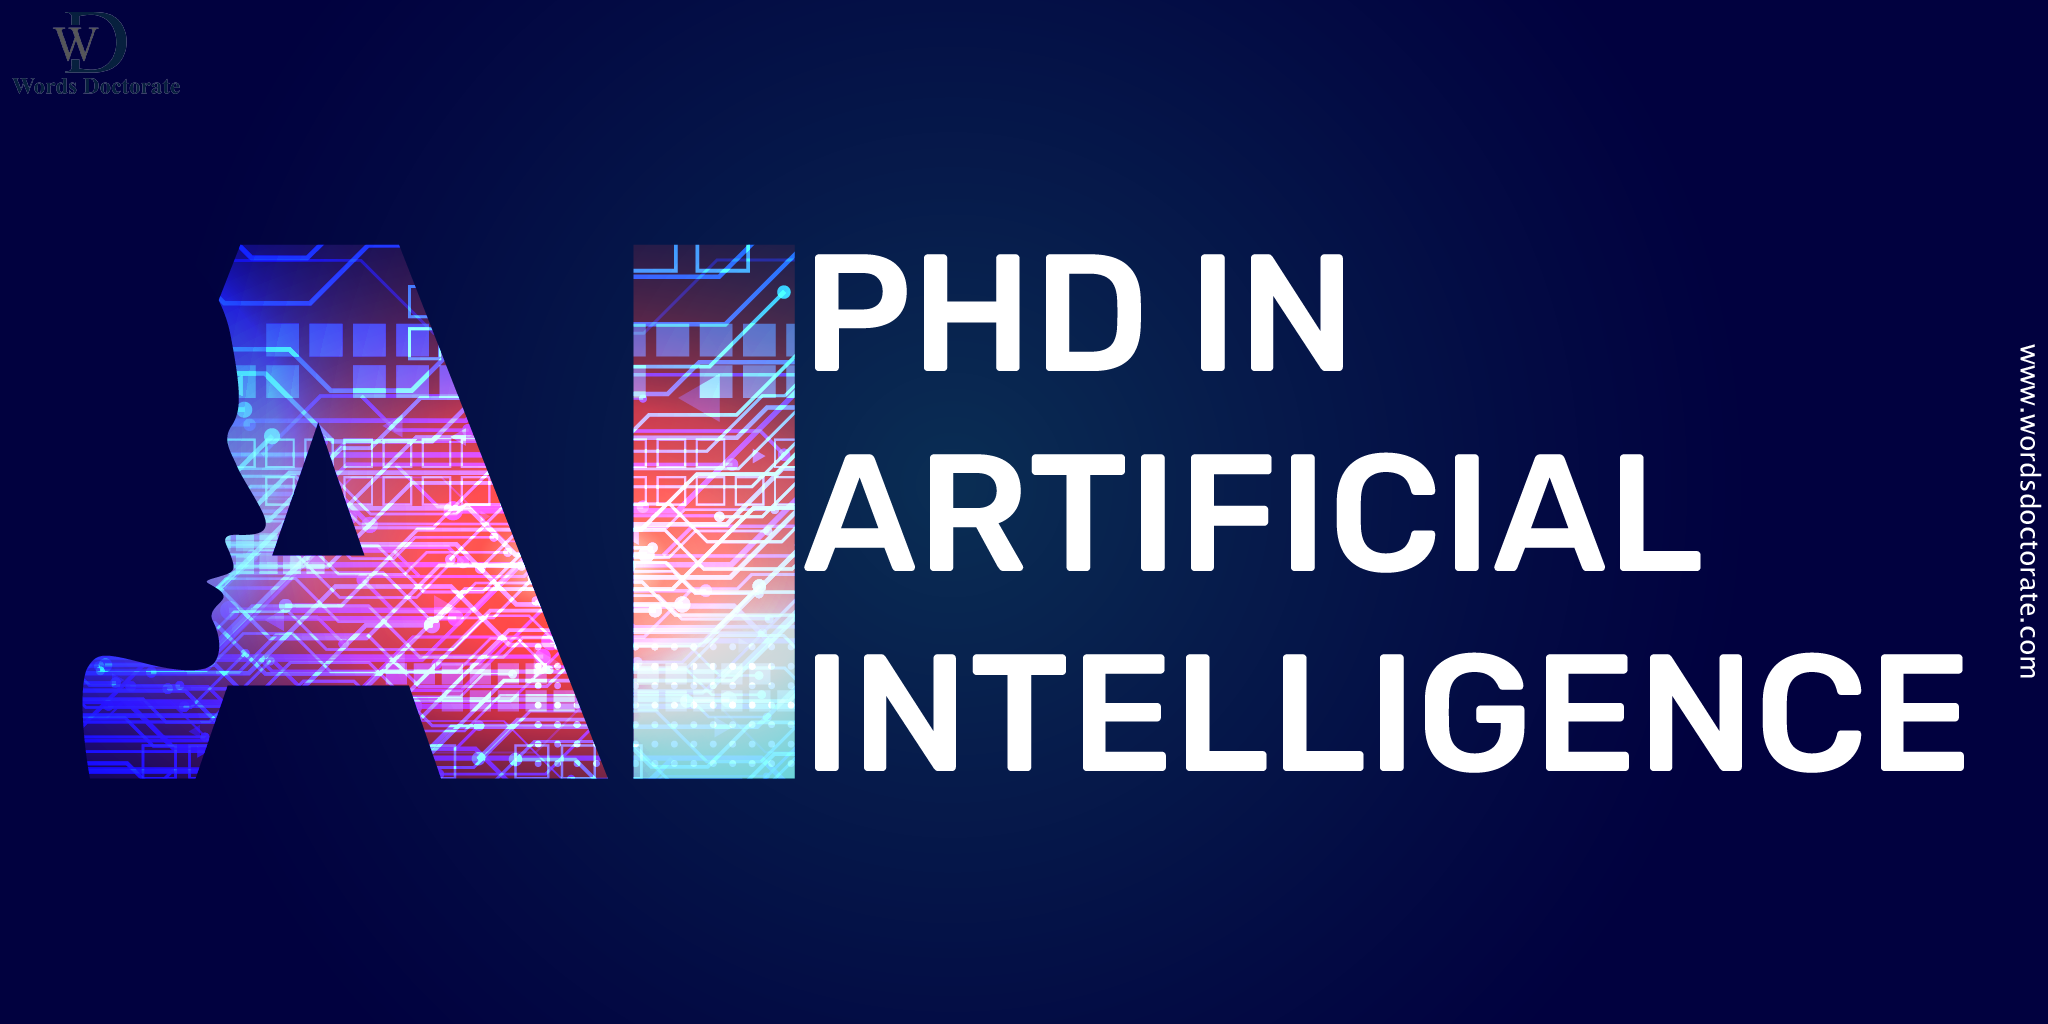 dissertation on artificial intelligence